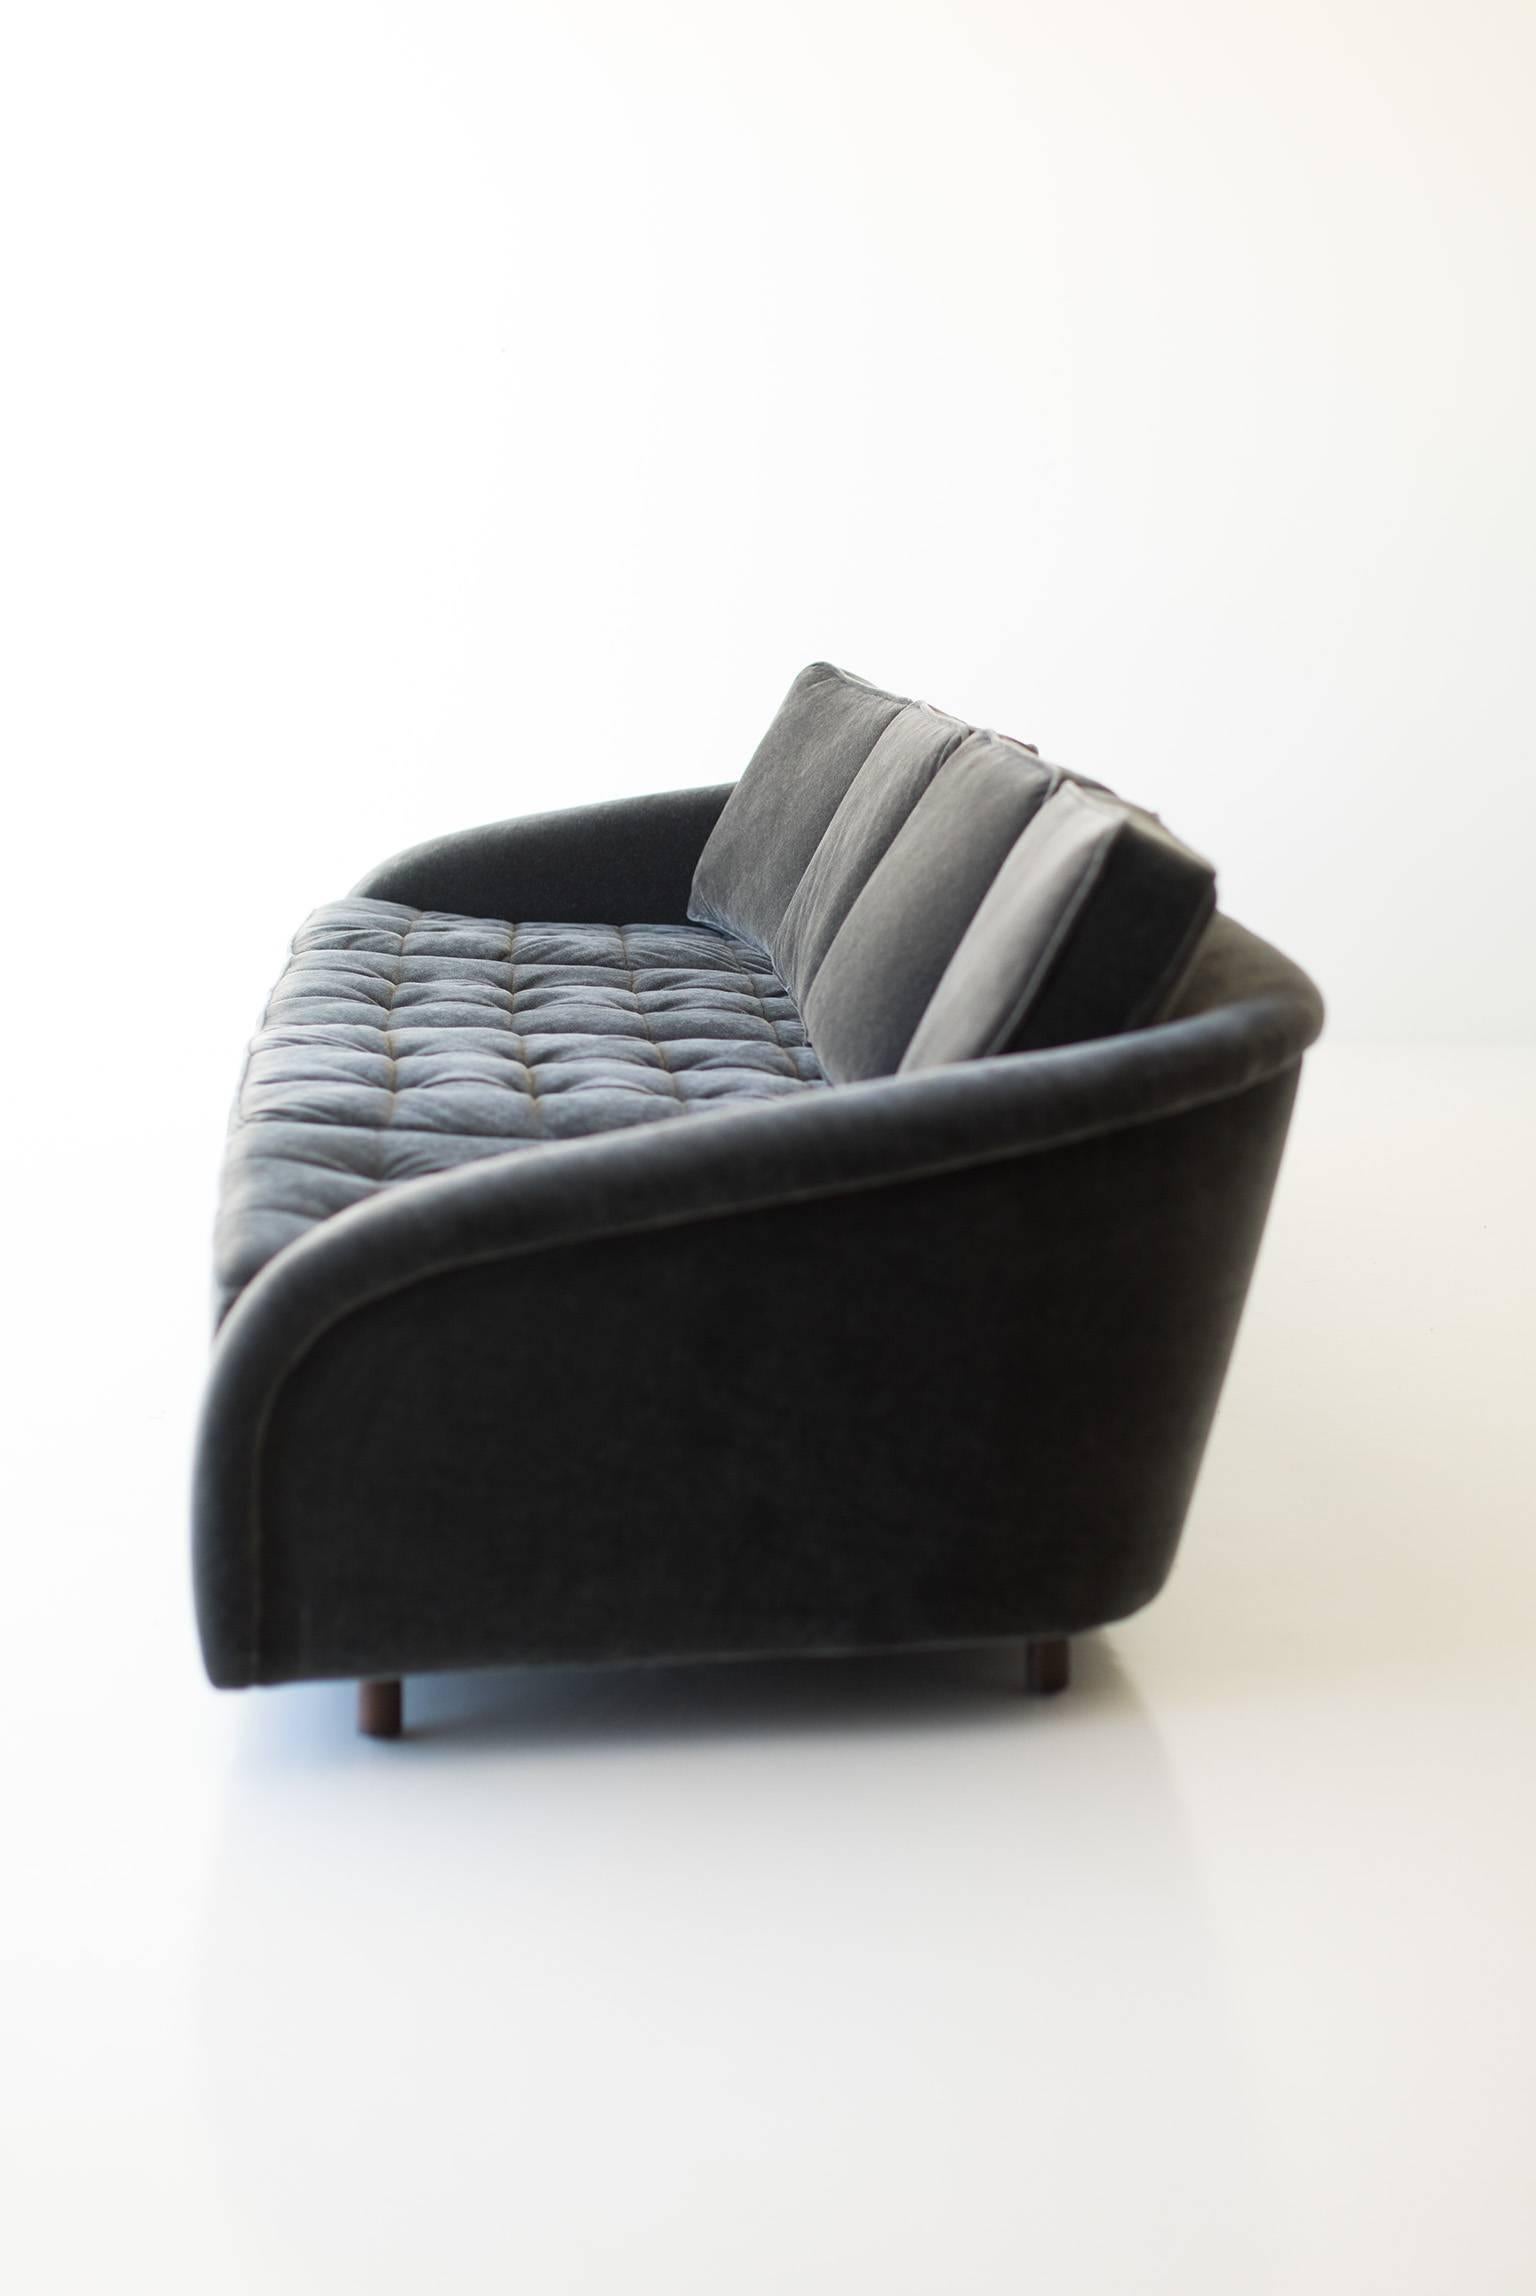 Harvey Probber Mohair Sofa for Harvey Probber Design Inc. 4